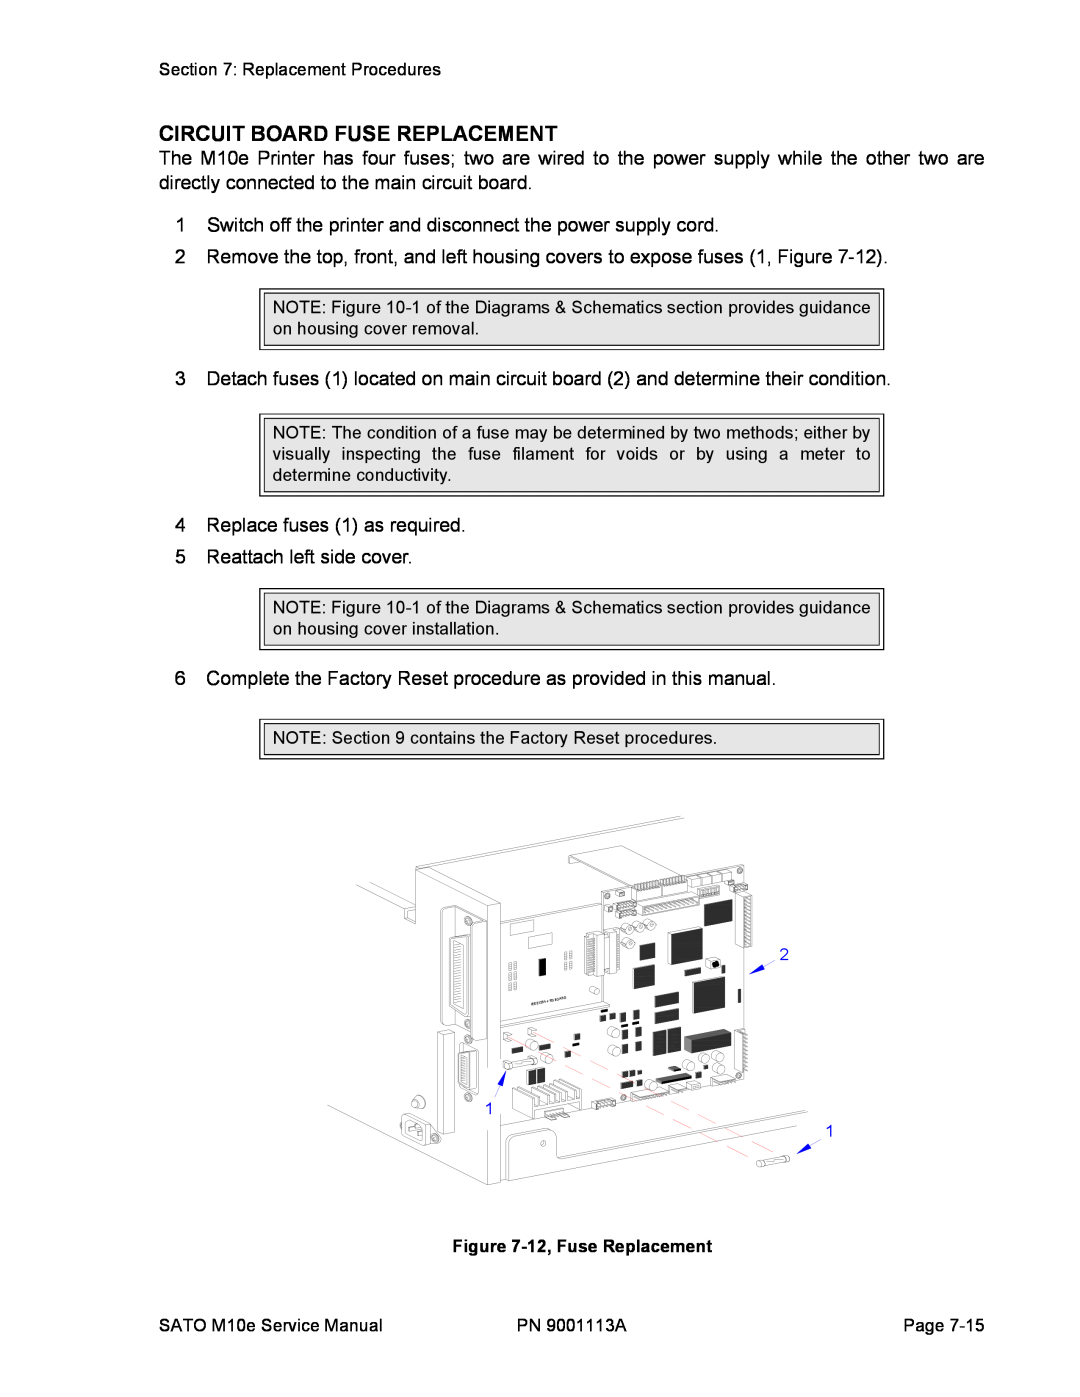 SATO 10e service manual Circuit Board Fuse Replacement, 12, Fuse Replacement 